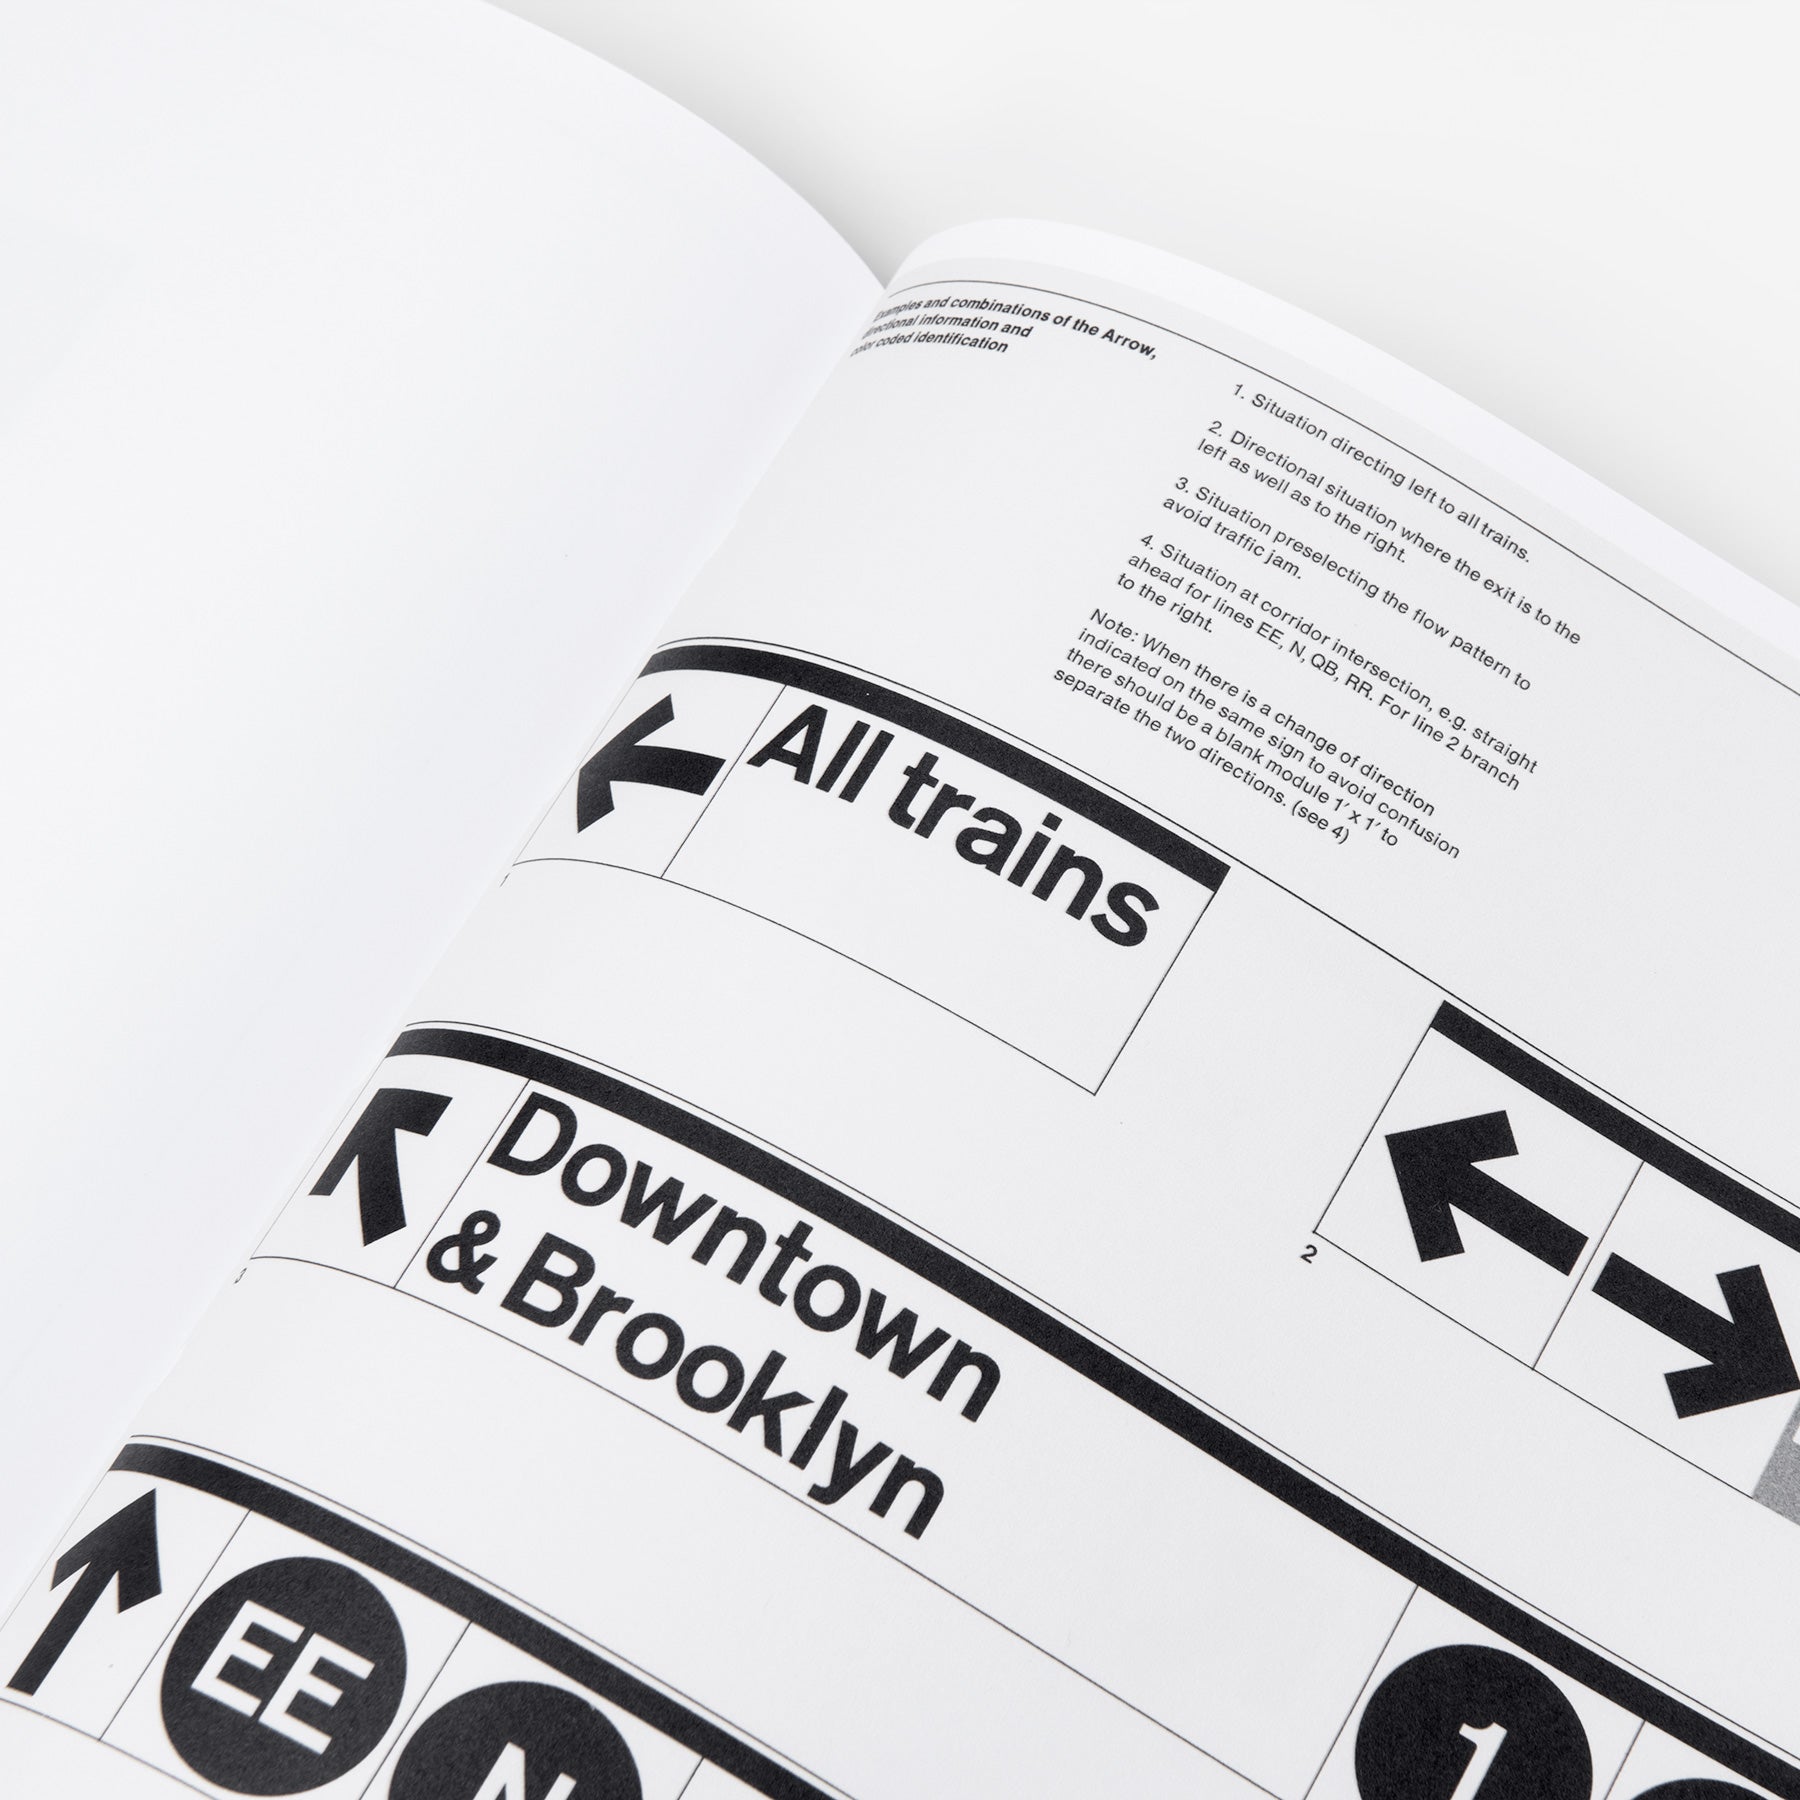 NYCTA Graphics Standards Manual